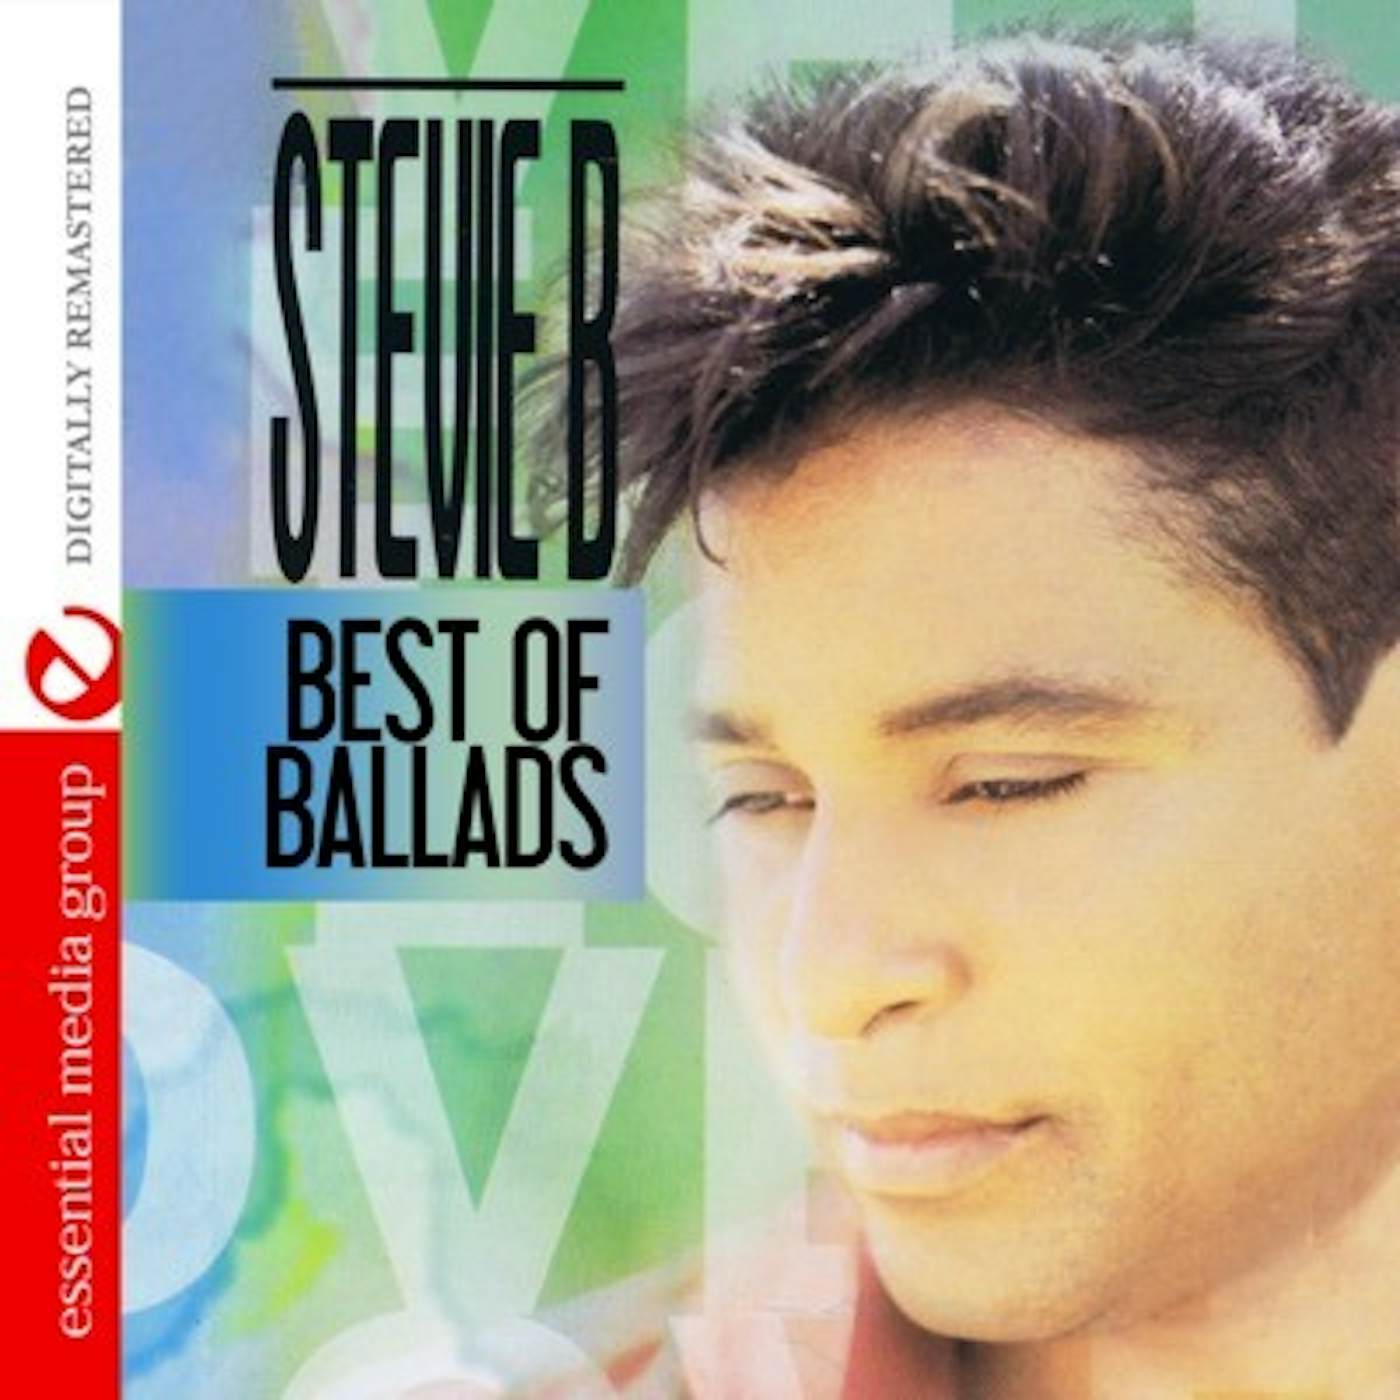 Stevie B BEST OF BALLADS CD